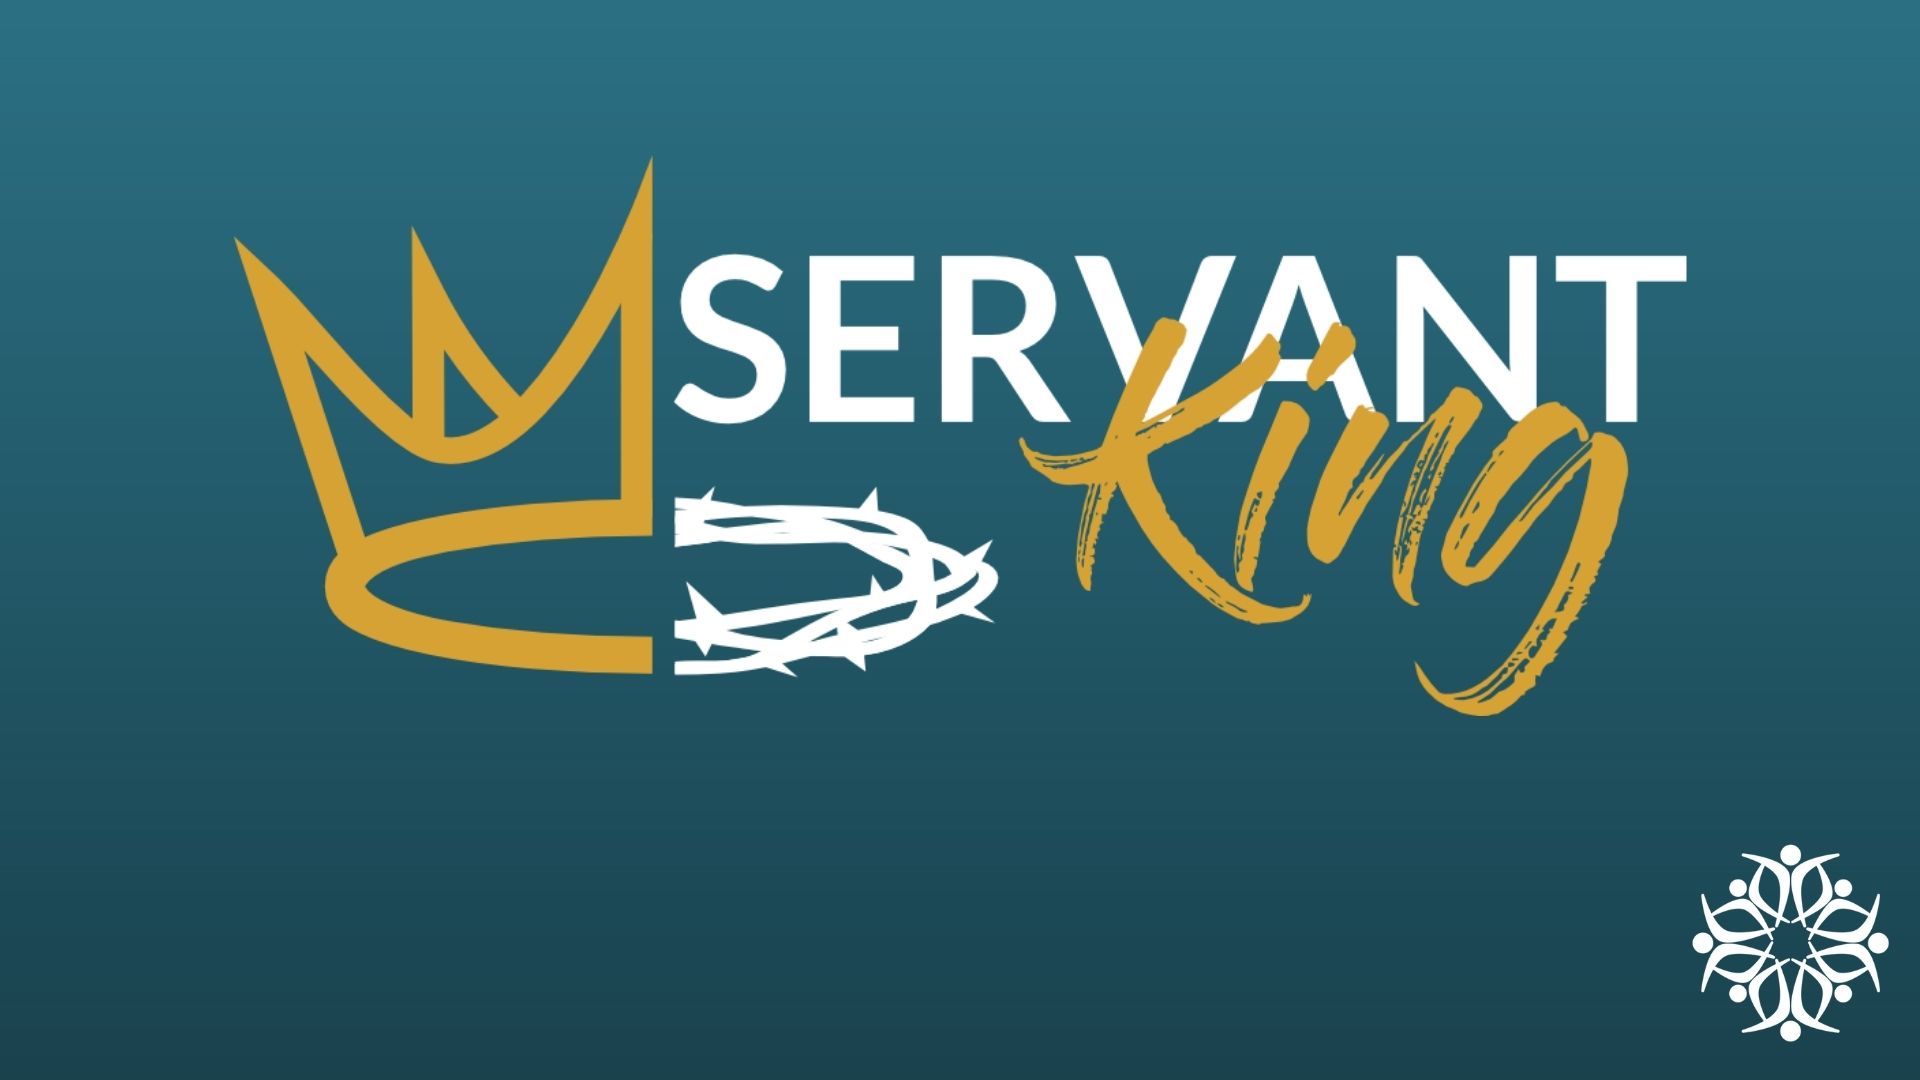 The Servant King’s Identity